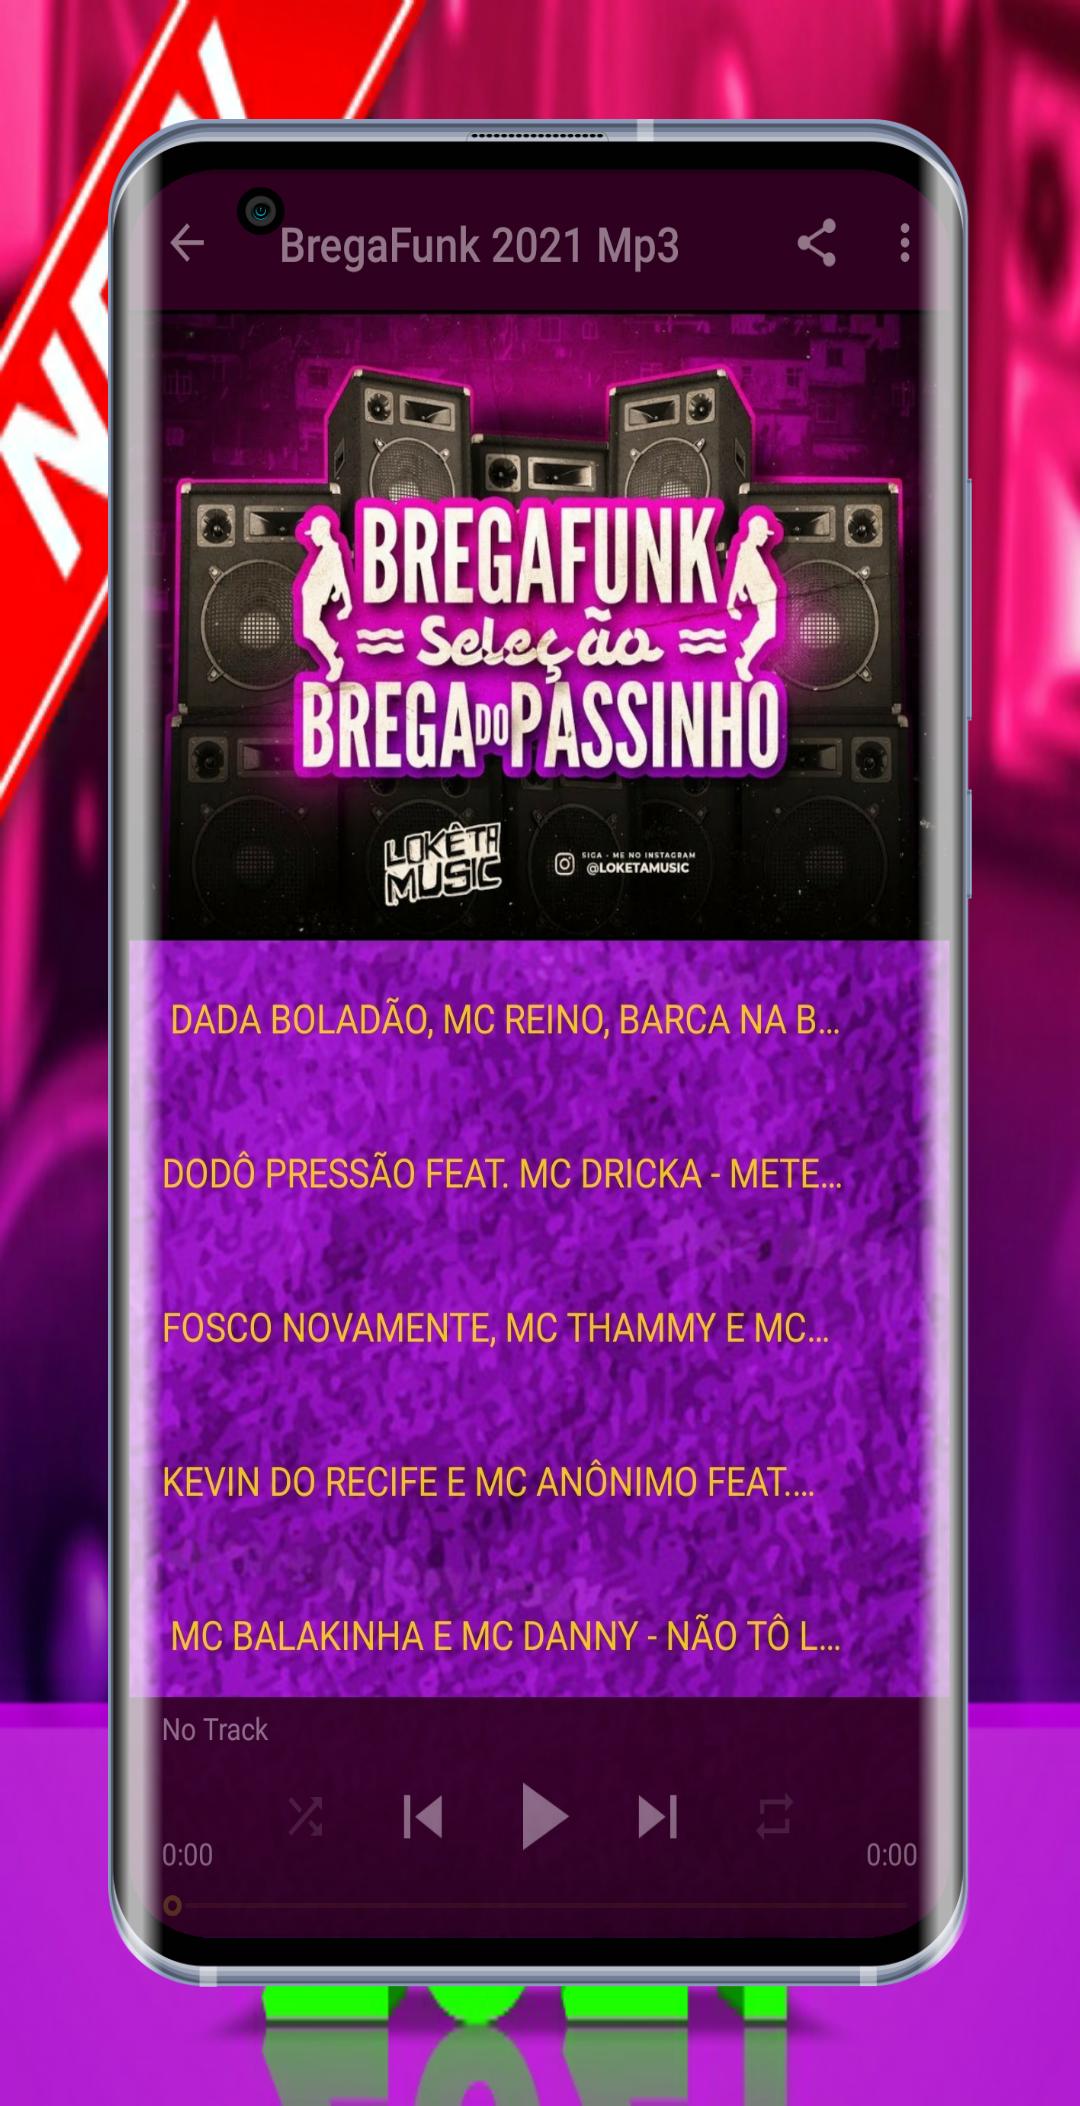 Brega Funk 2021 Musicas Offline For Android Apk Download